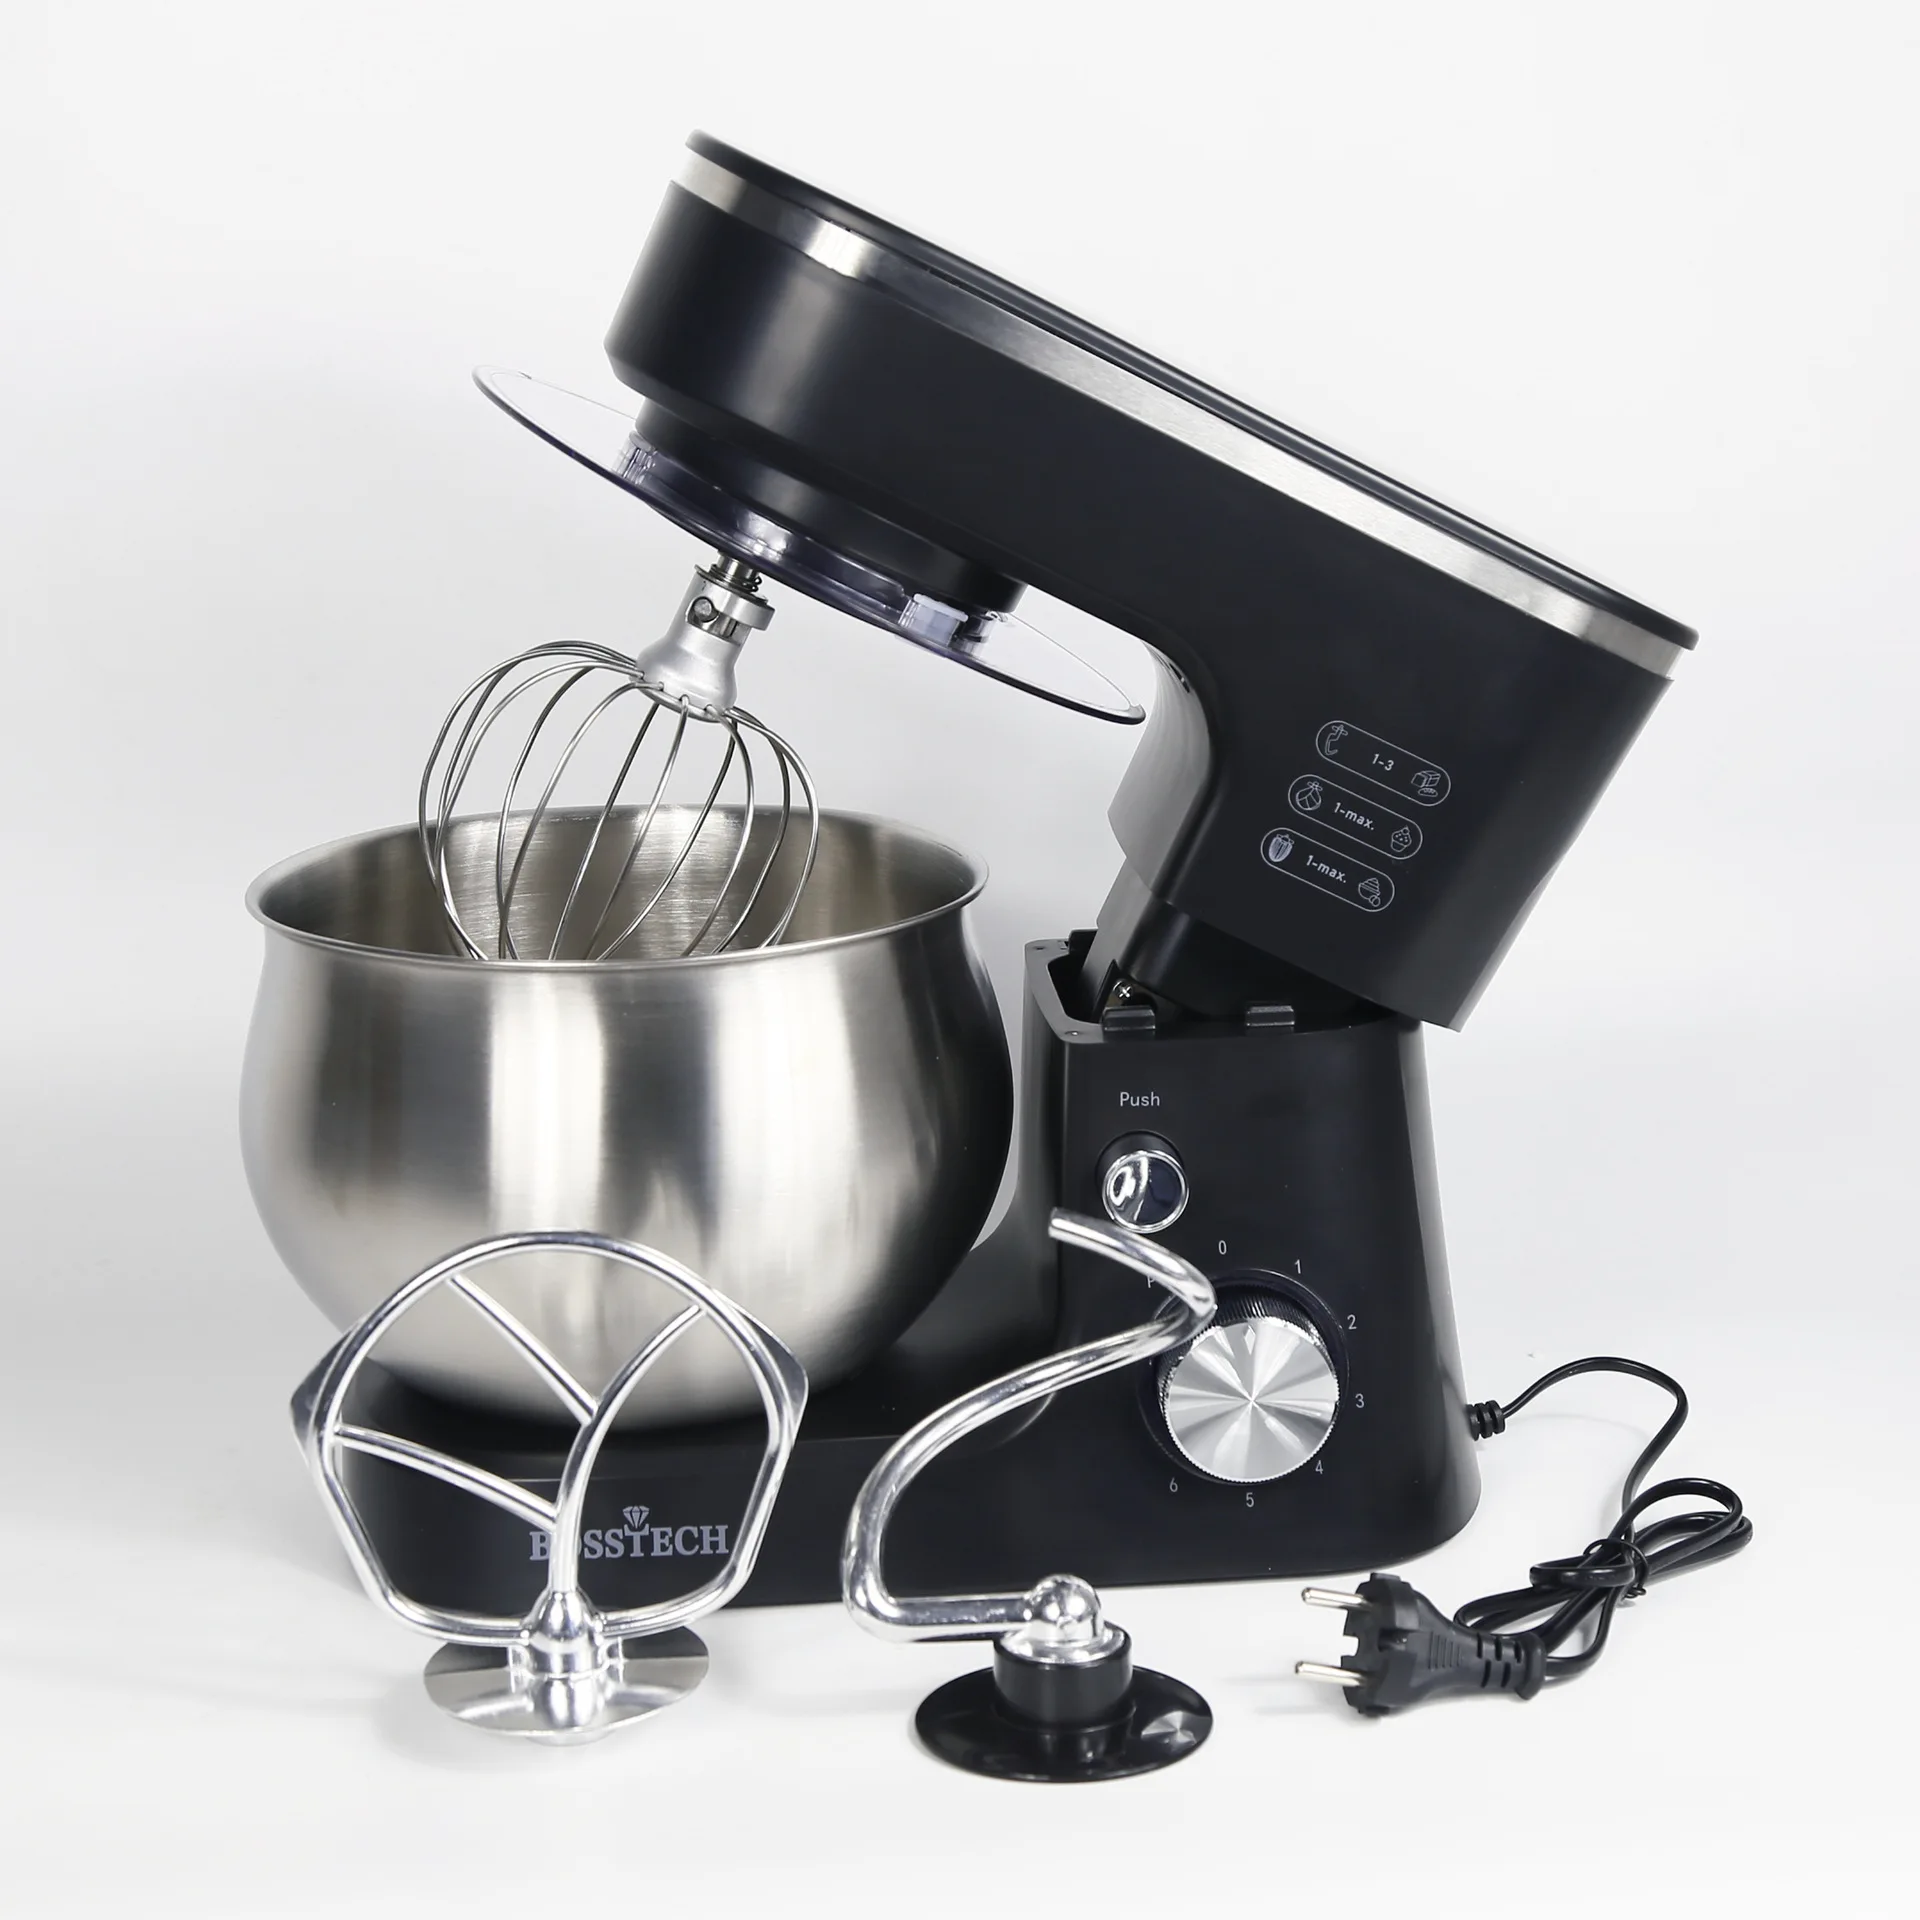 Electric Flour Mixer For Kitchenaid Cuisine Robot 1200w Bakery Dough Home Kitchen Appliances Stand Food Mixer